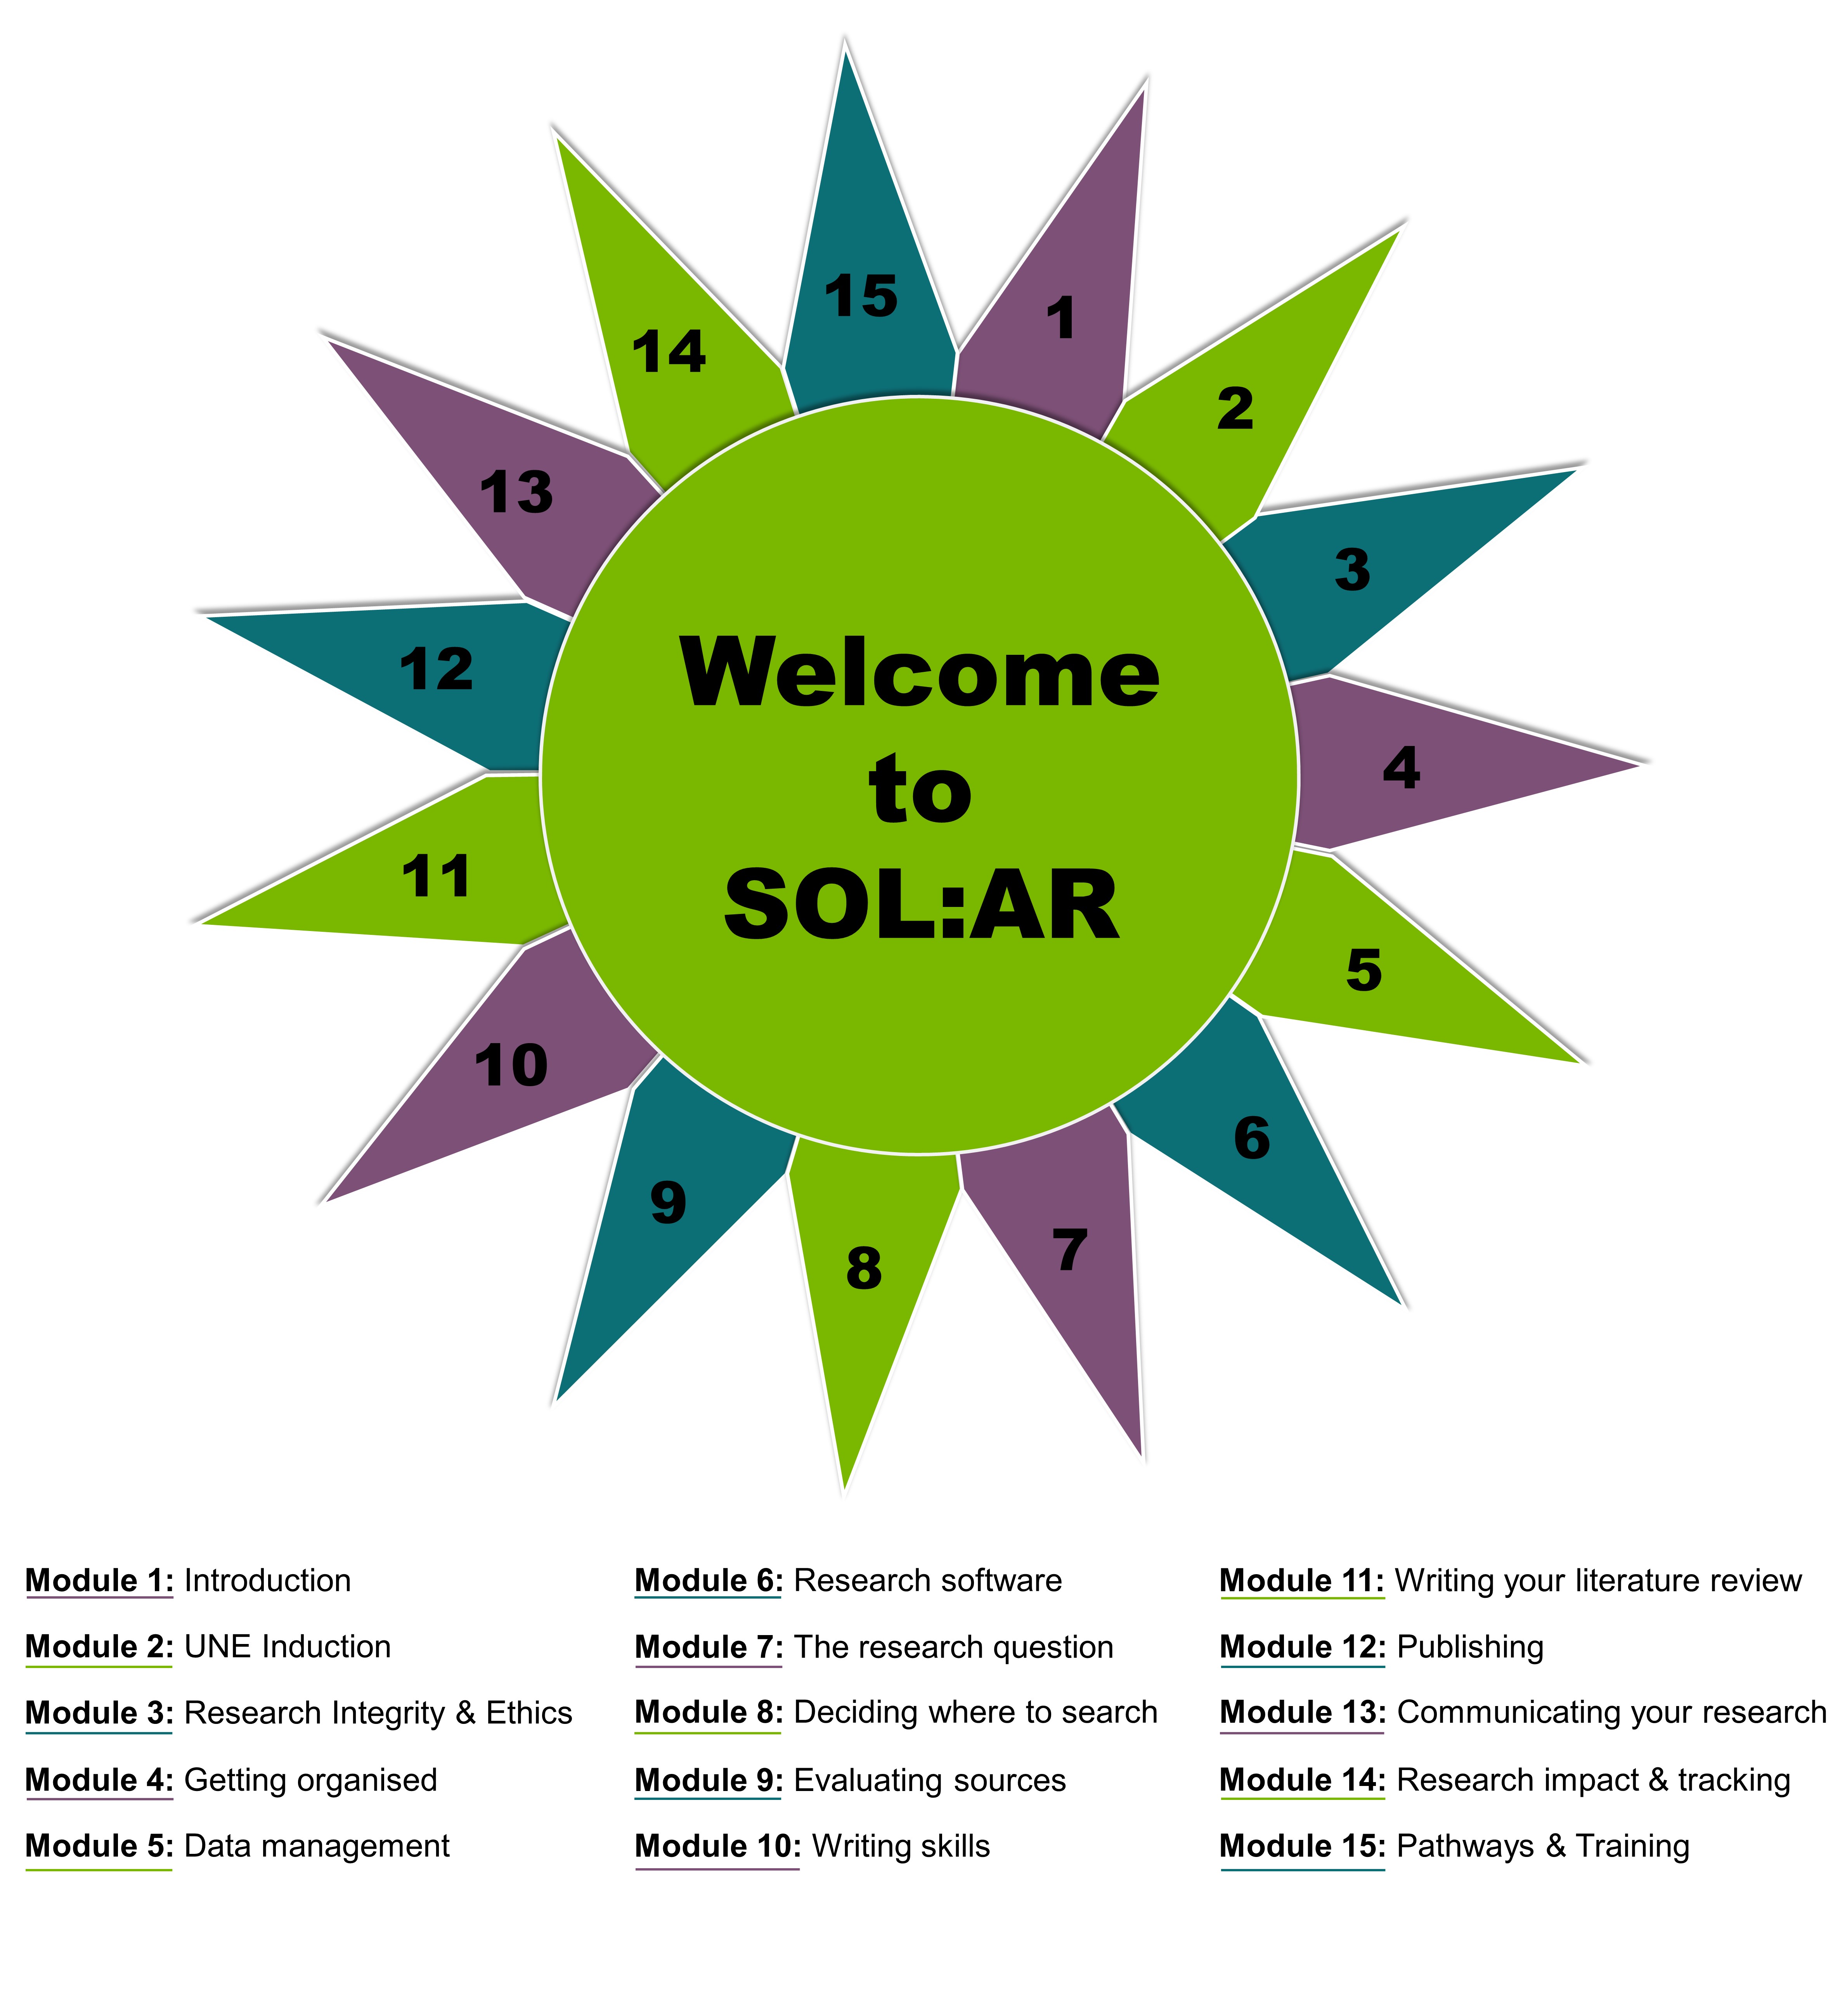 Figure 1.1.1. Sun diagram outlining SOLAR modules